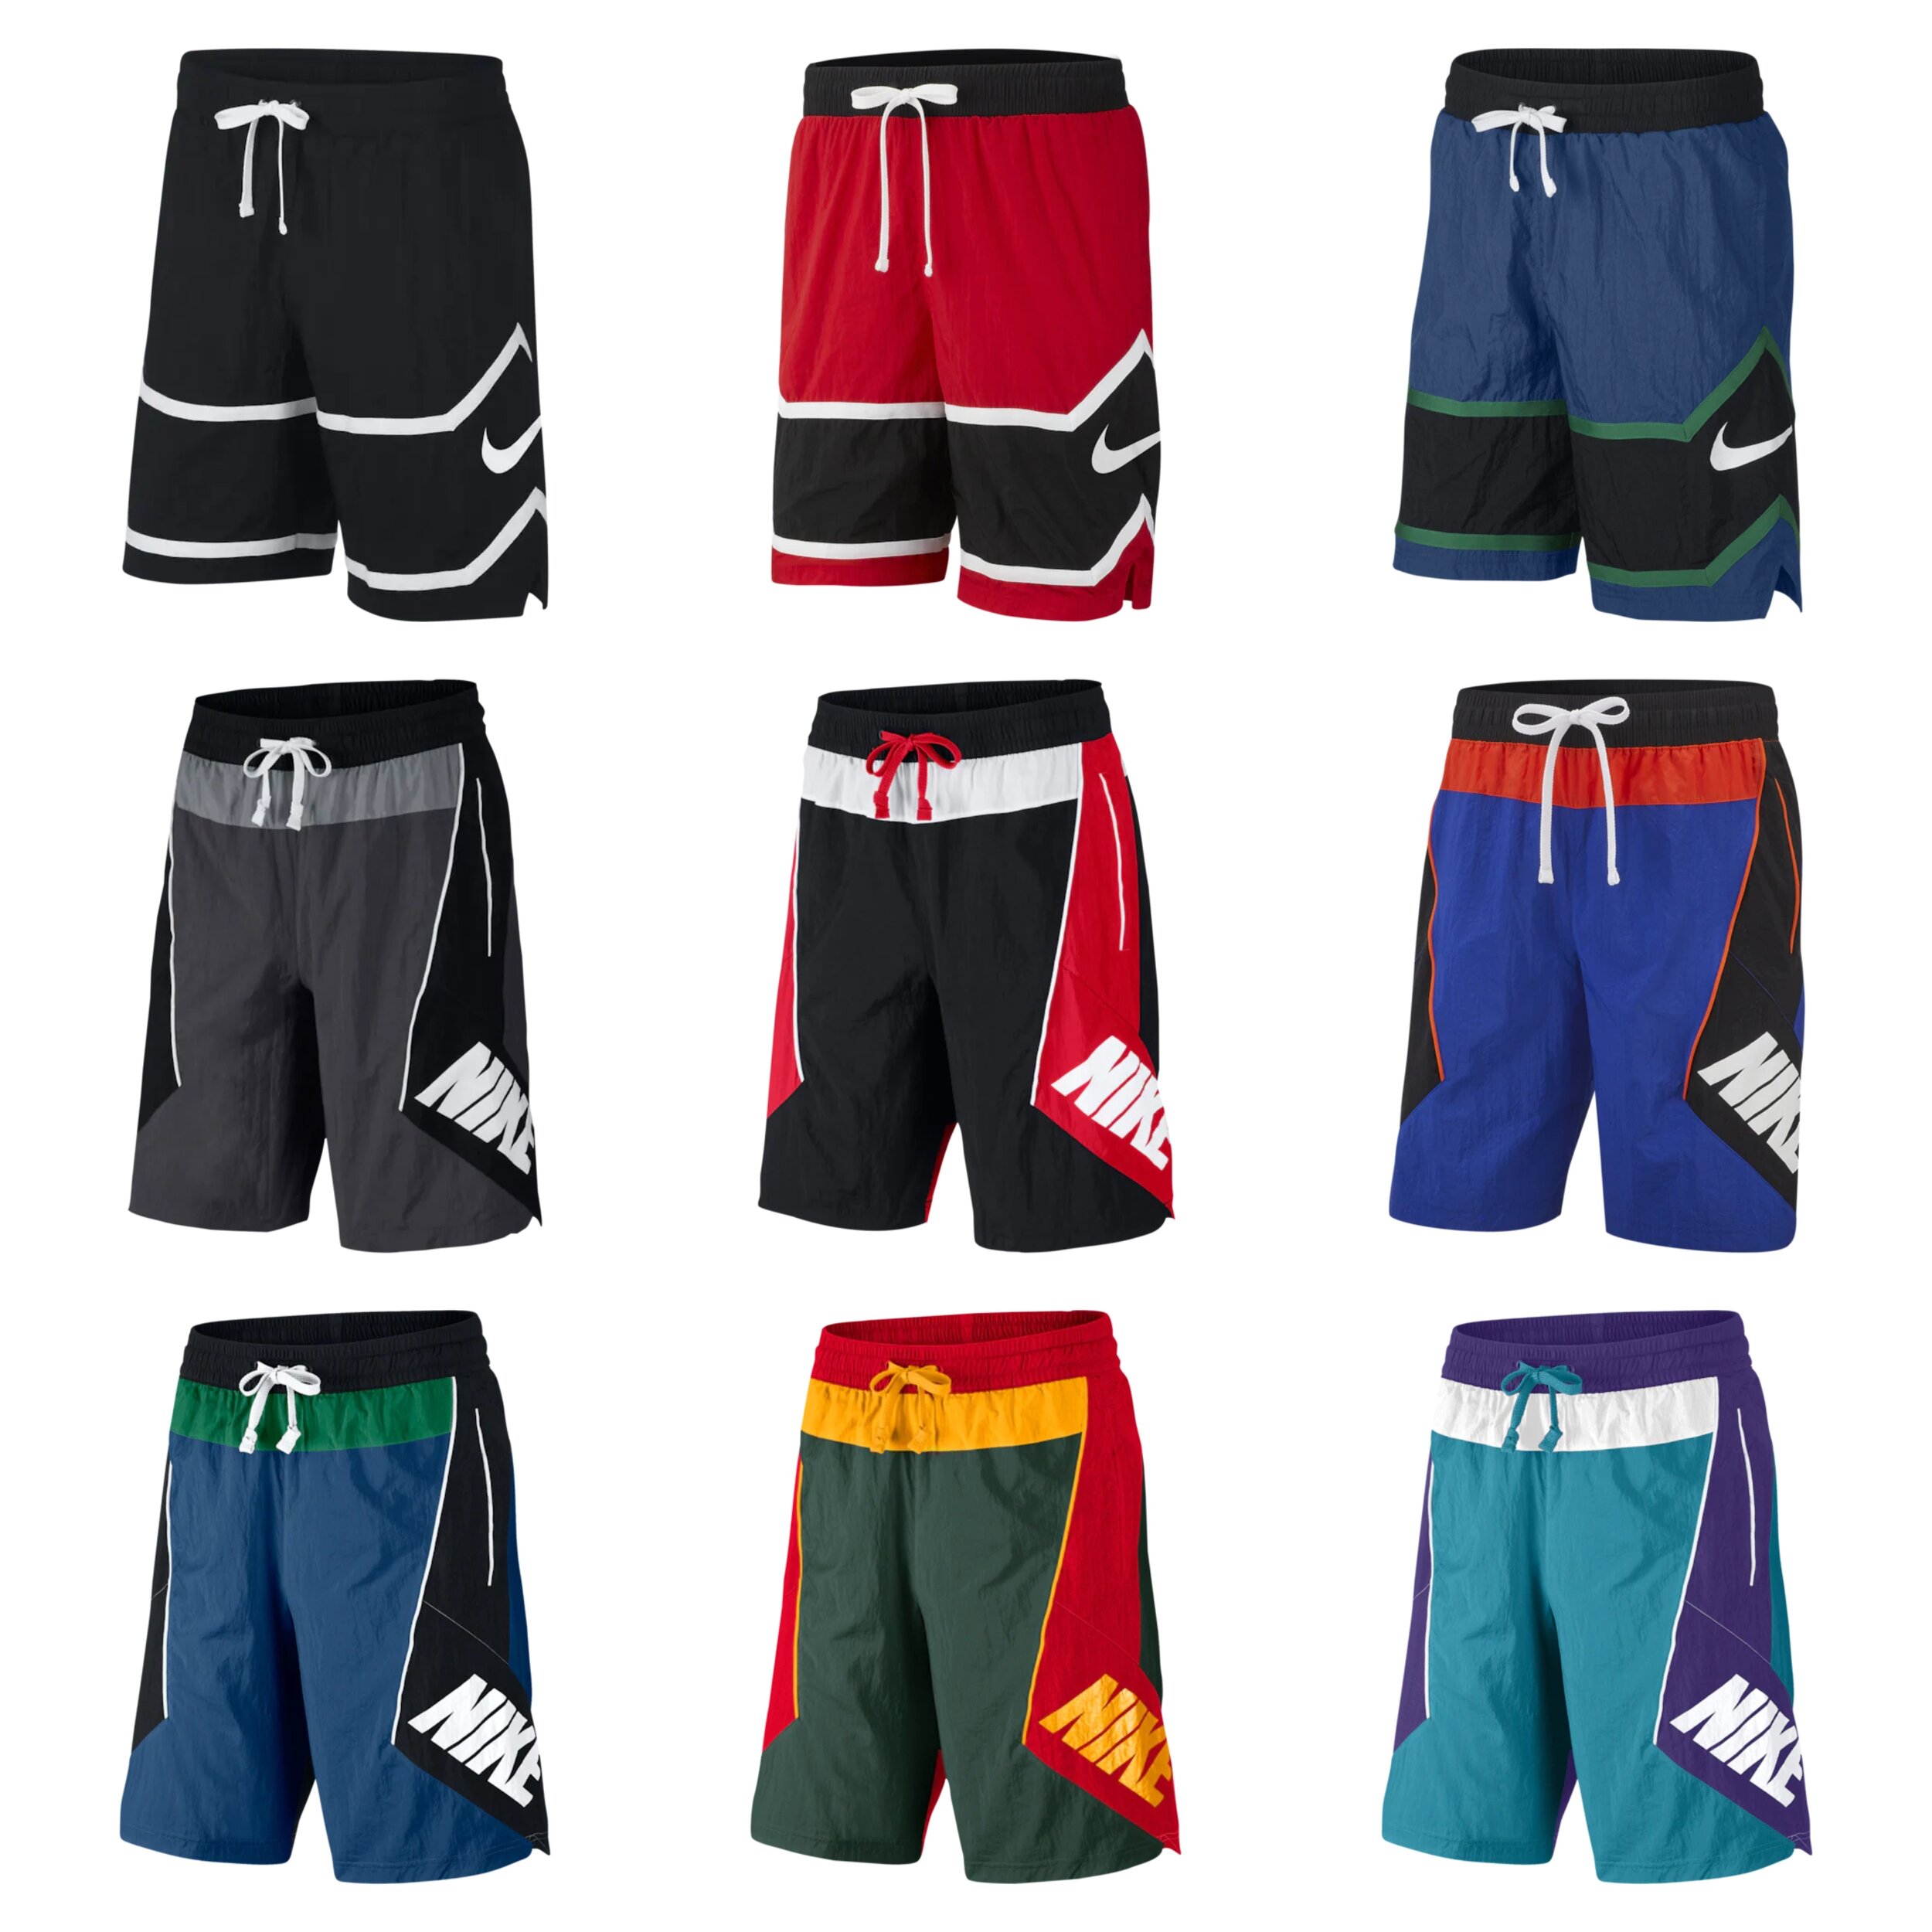 Throwback-Nike-Shorts-On-Sale.jpg